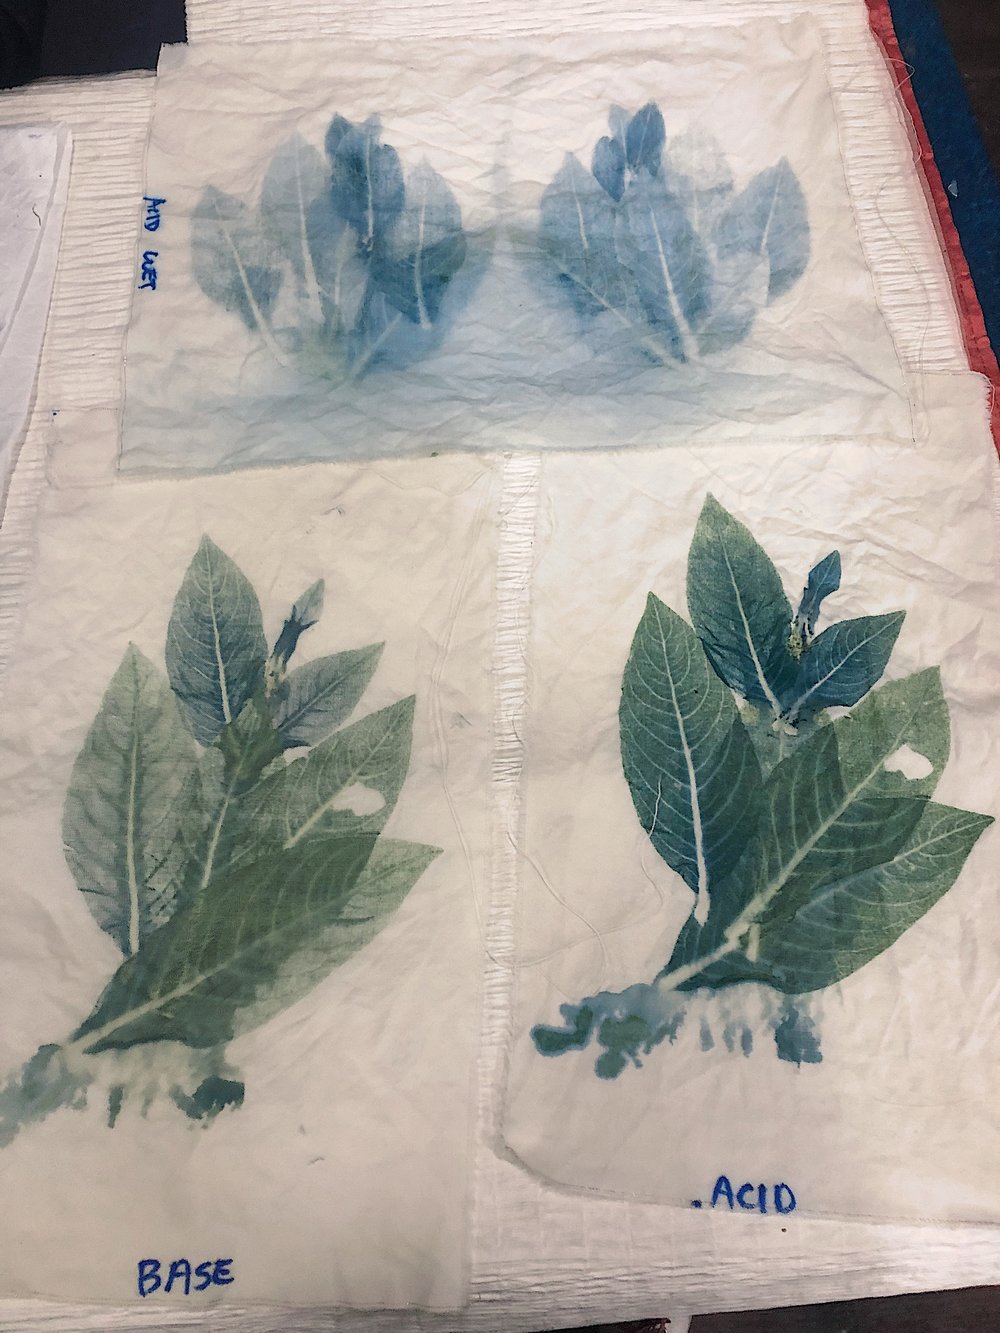  John's indigo leaf prints using pH modifications 